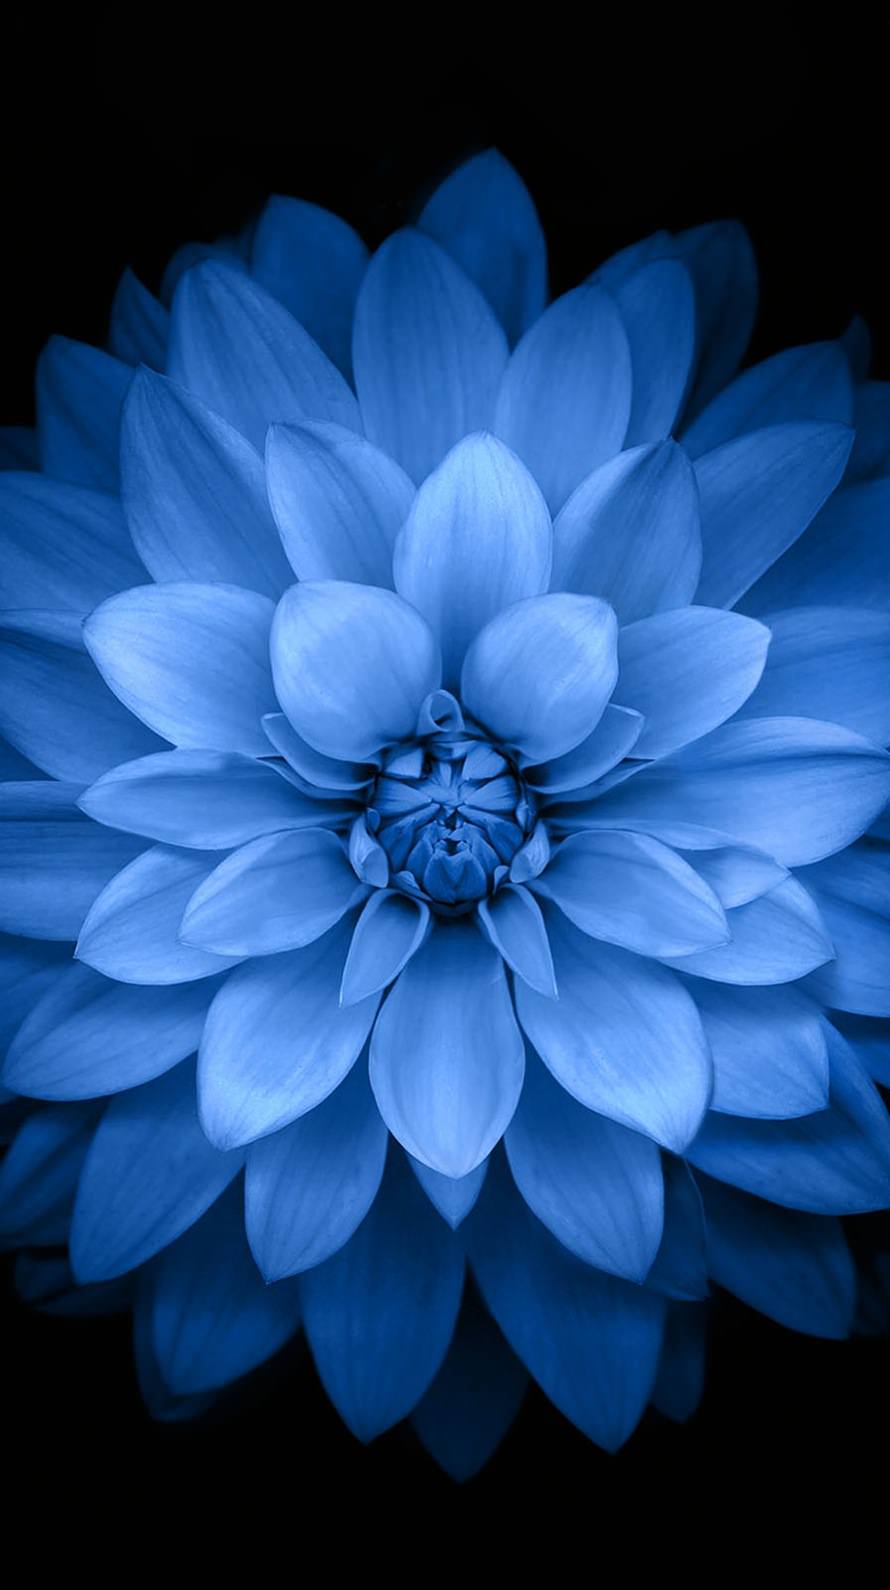 Blue black flower | wallpaper.sc iPhone6s